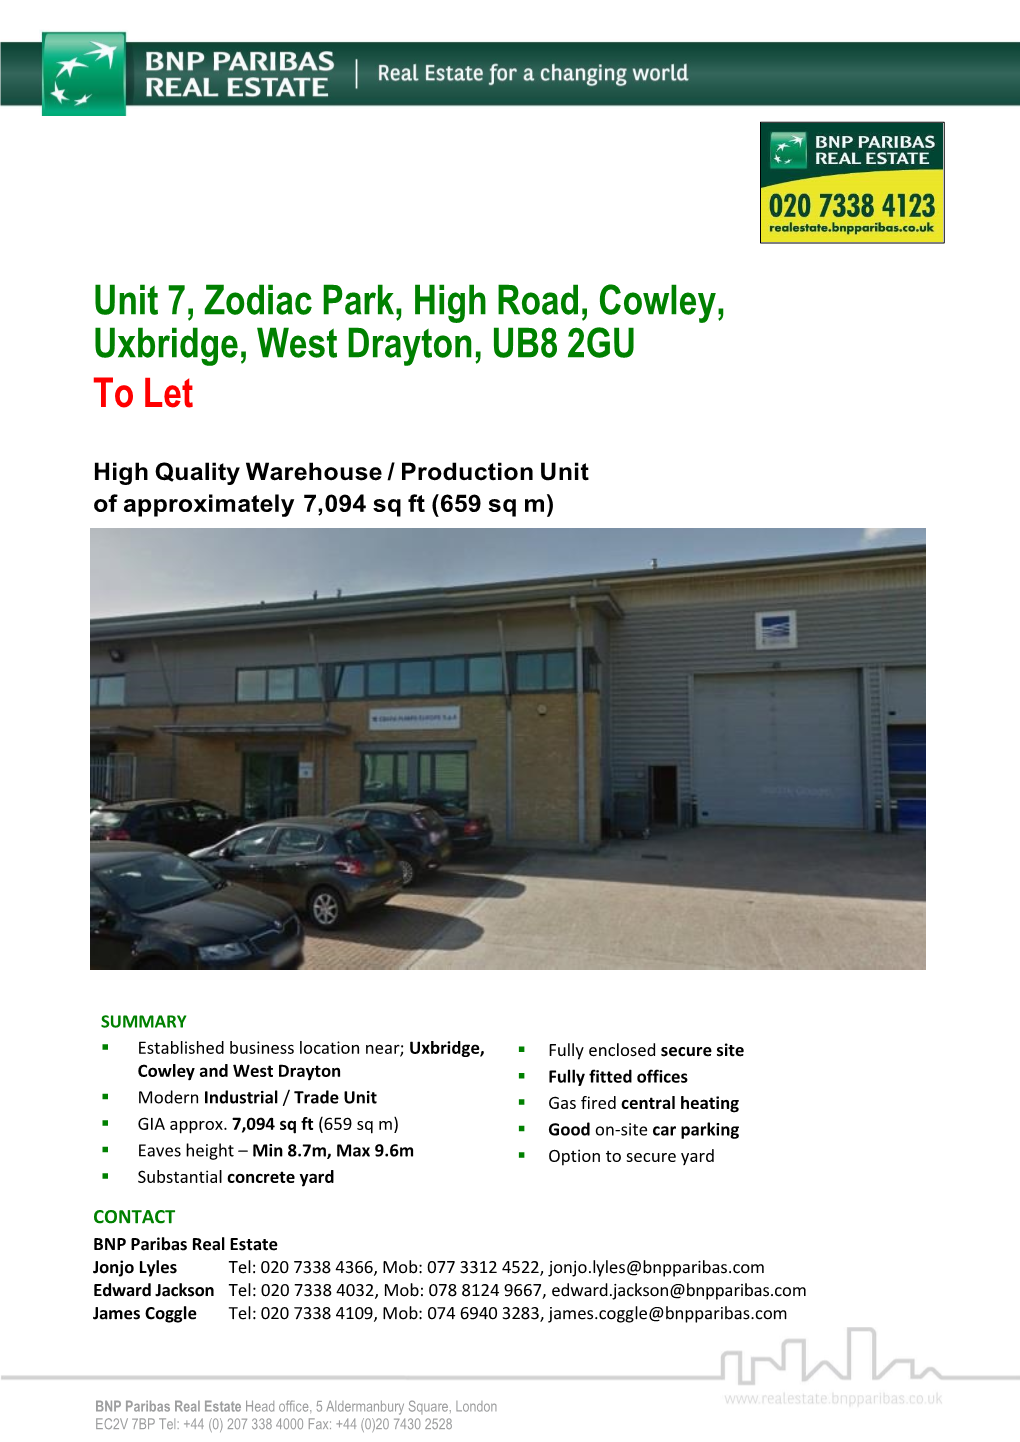 Unit 7, Zodiac Park, High Road, Cowley, Uxbridge, West Drayton, UB8 2GU to Let